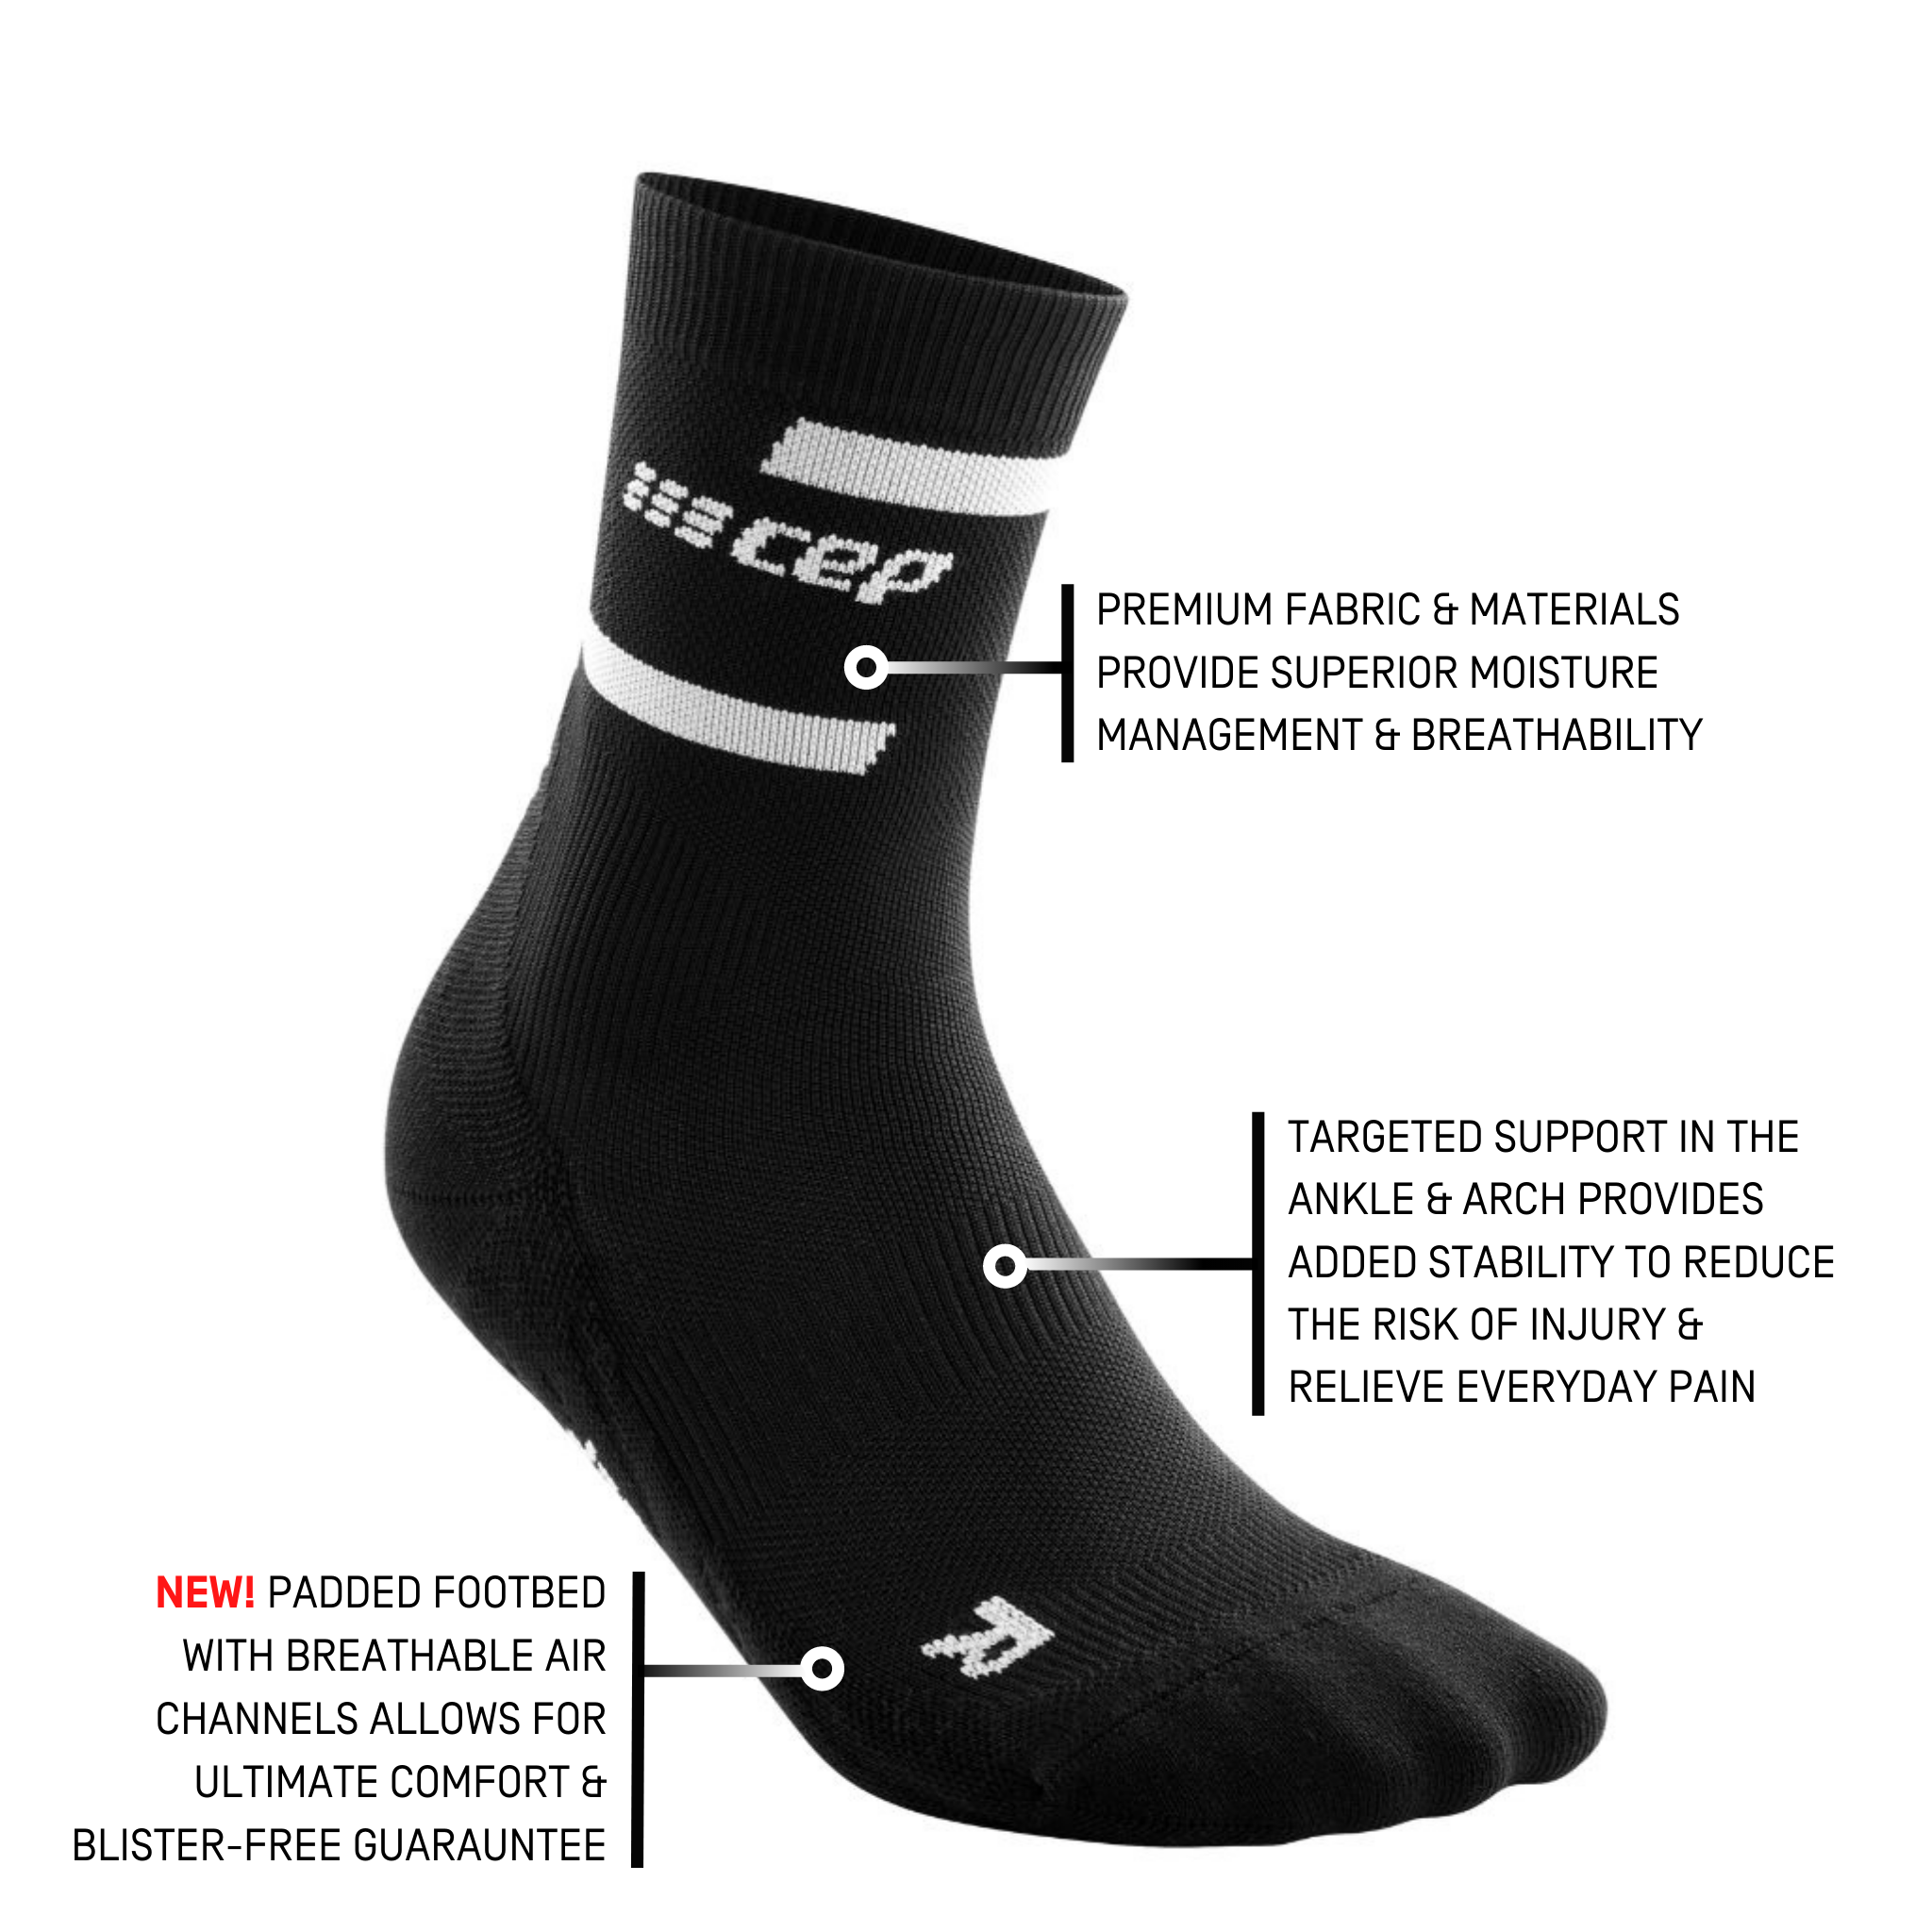 CEP - Reflective Compression Run Socks Men black at Sport Bittl